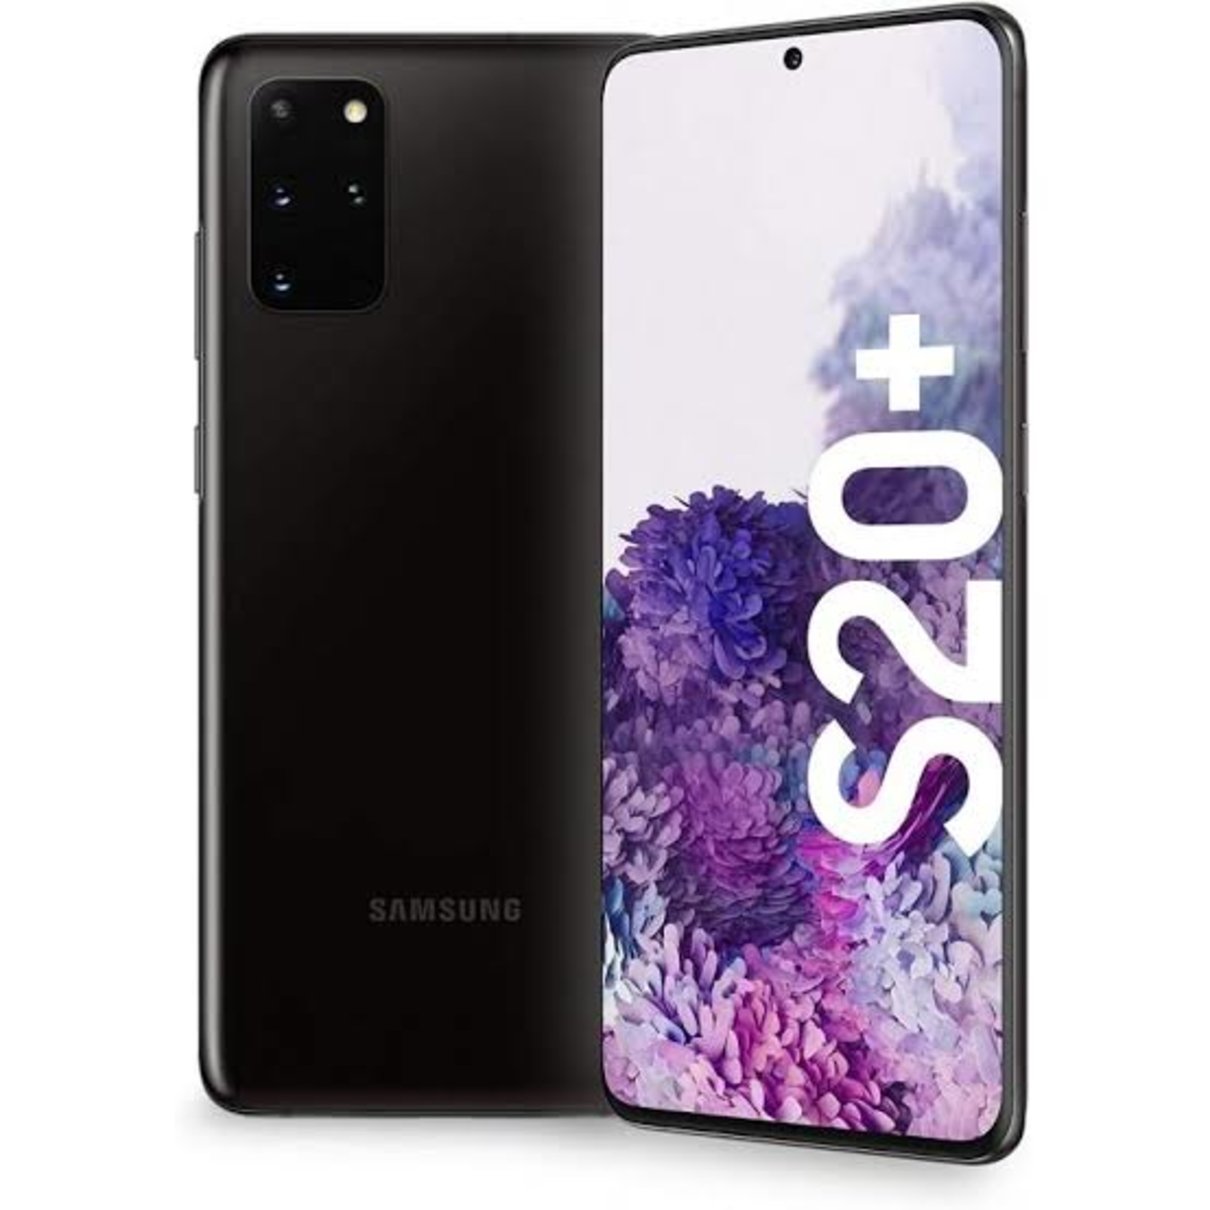 Samsung-Galaxy-S20-Plus-Price-in-Nigeria-i